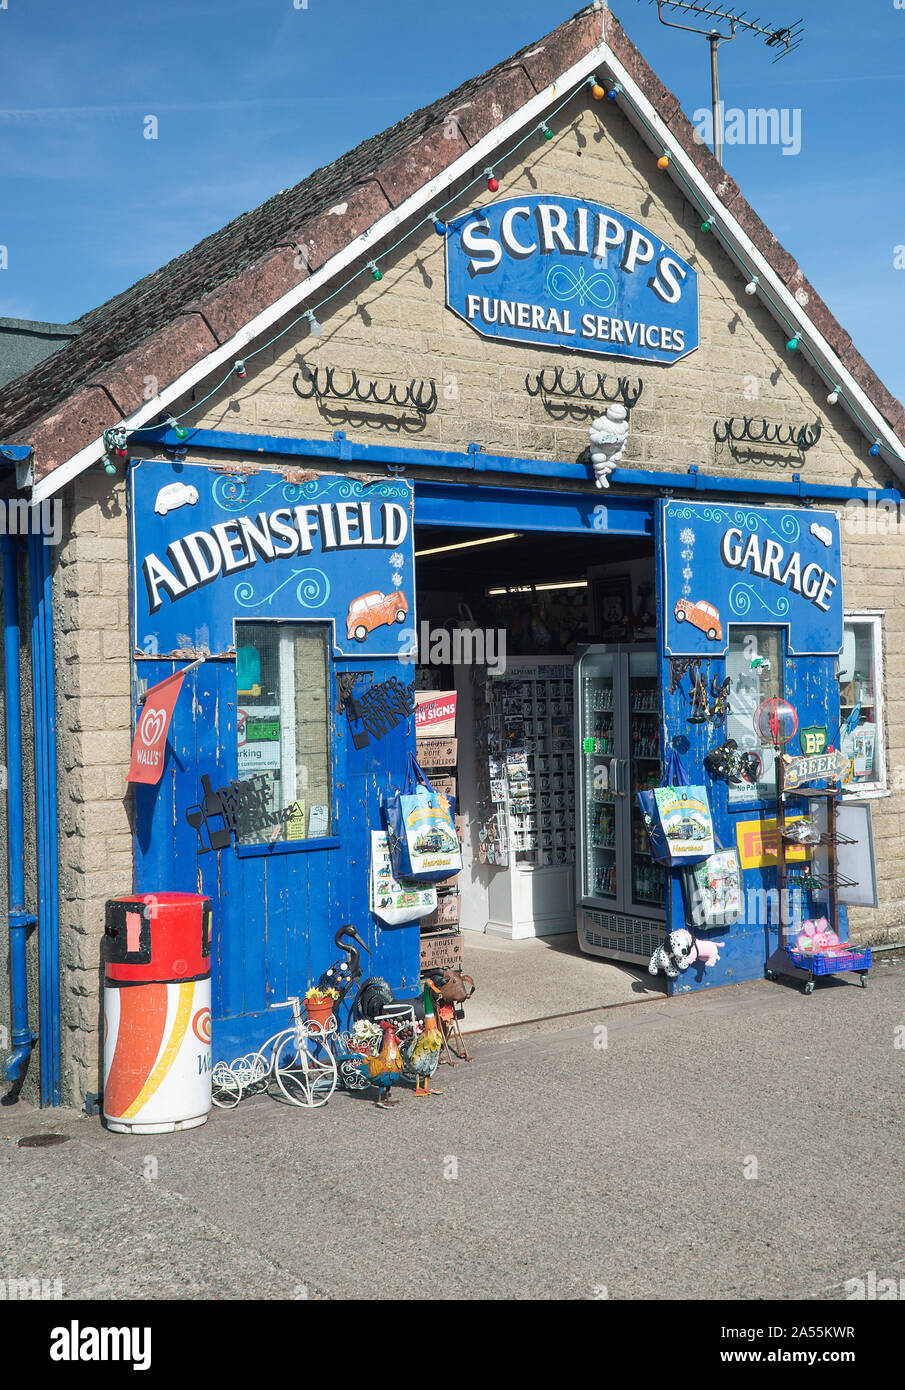 Die berühmte Aidensfield Garage in Heartbeat Television Soap Opera in Goathland North Yorkshire England United Gingdom UK Stockfoto